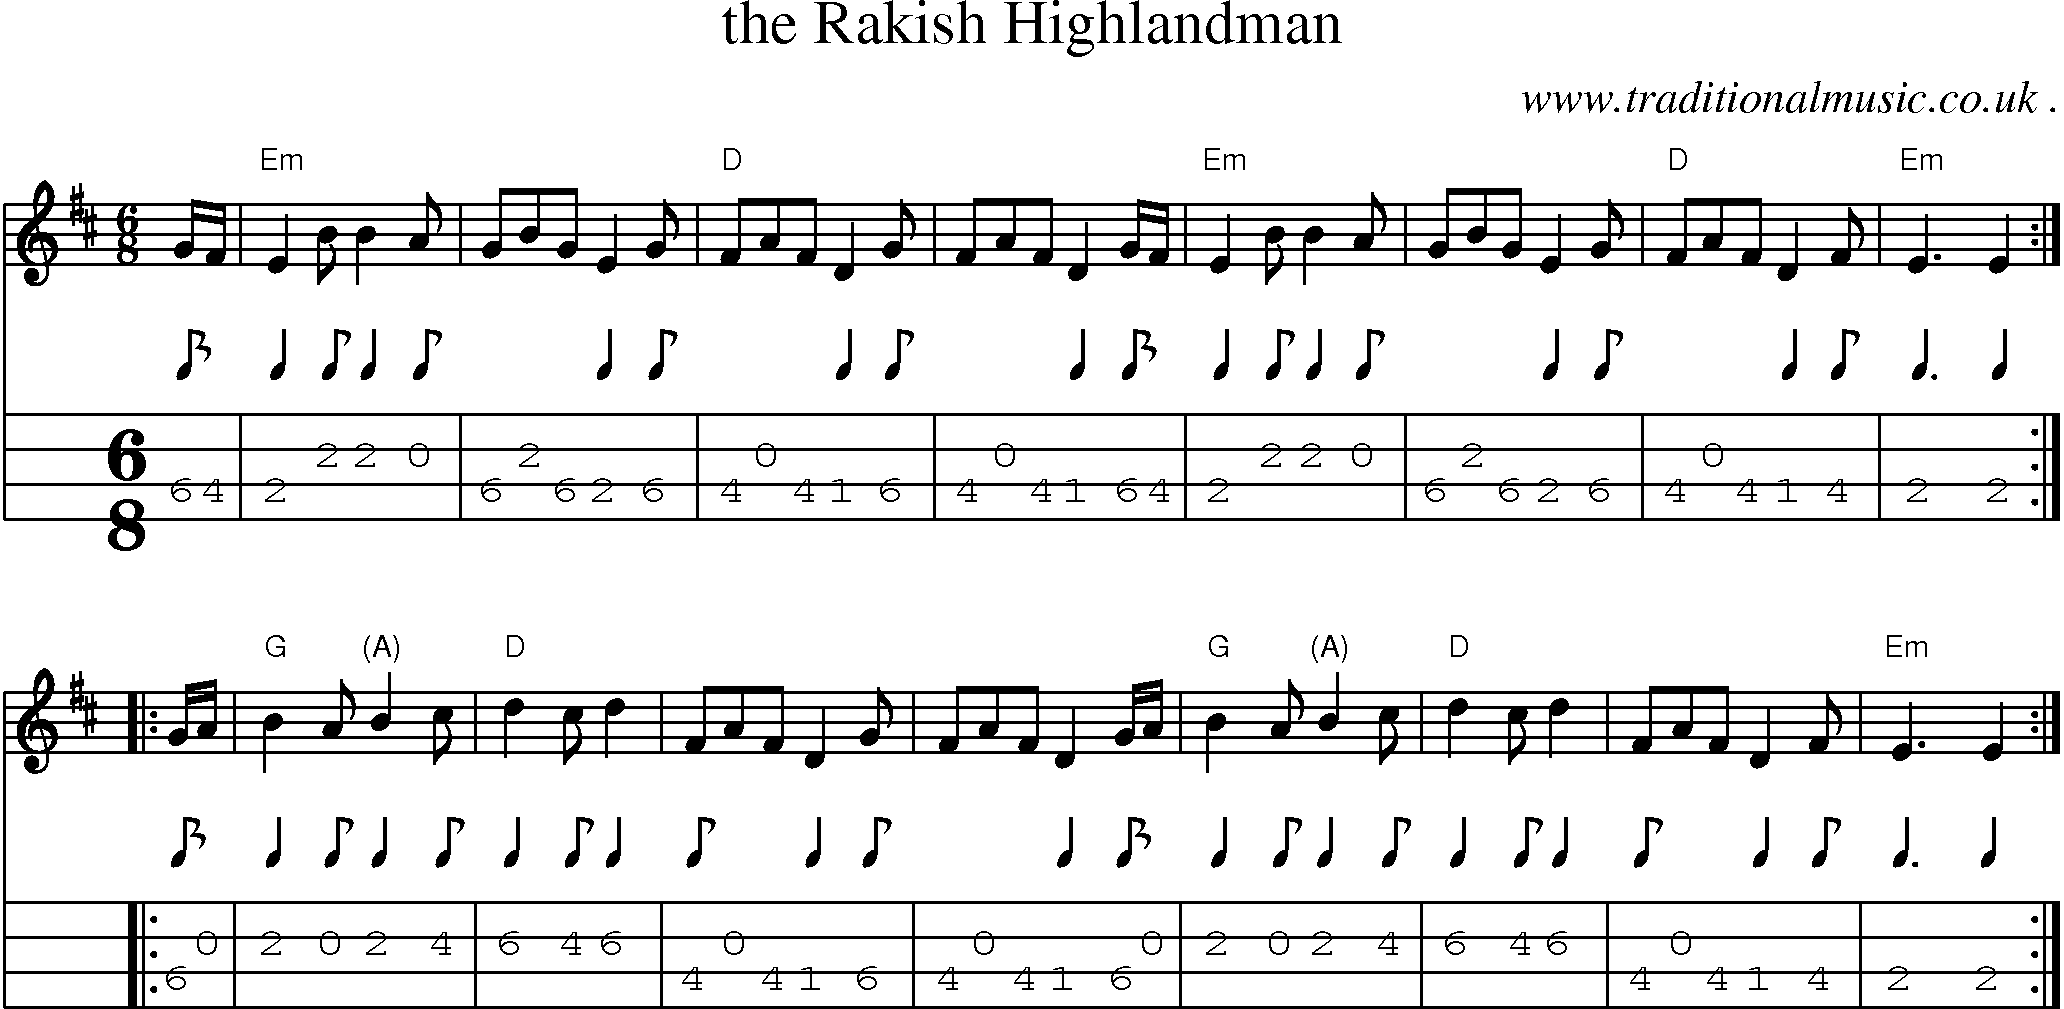 Sheet-music  score, Chords and Mandolin Tabs for The Rakish Highlandman